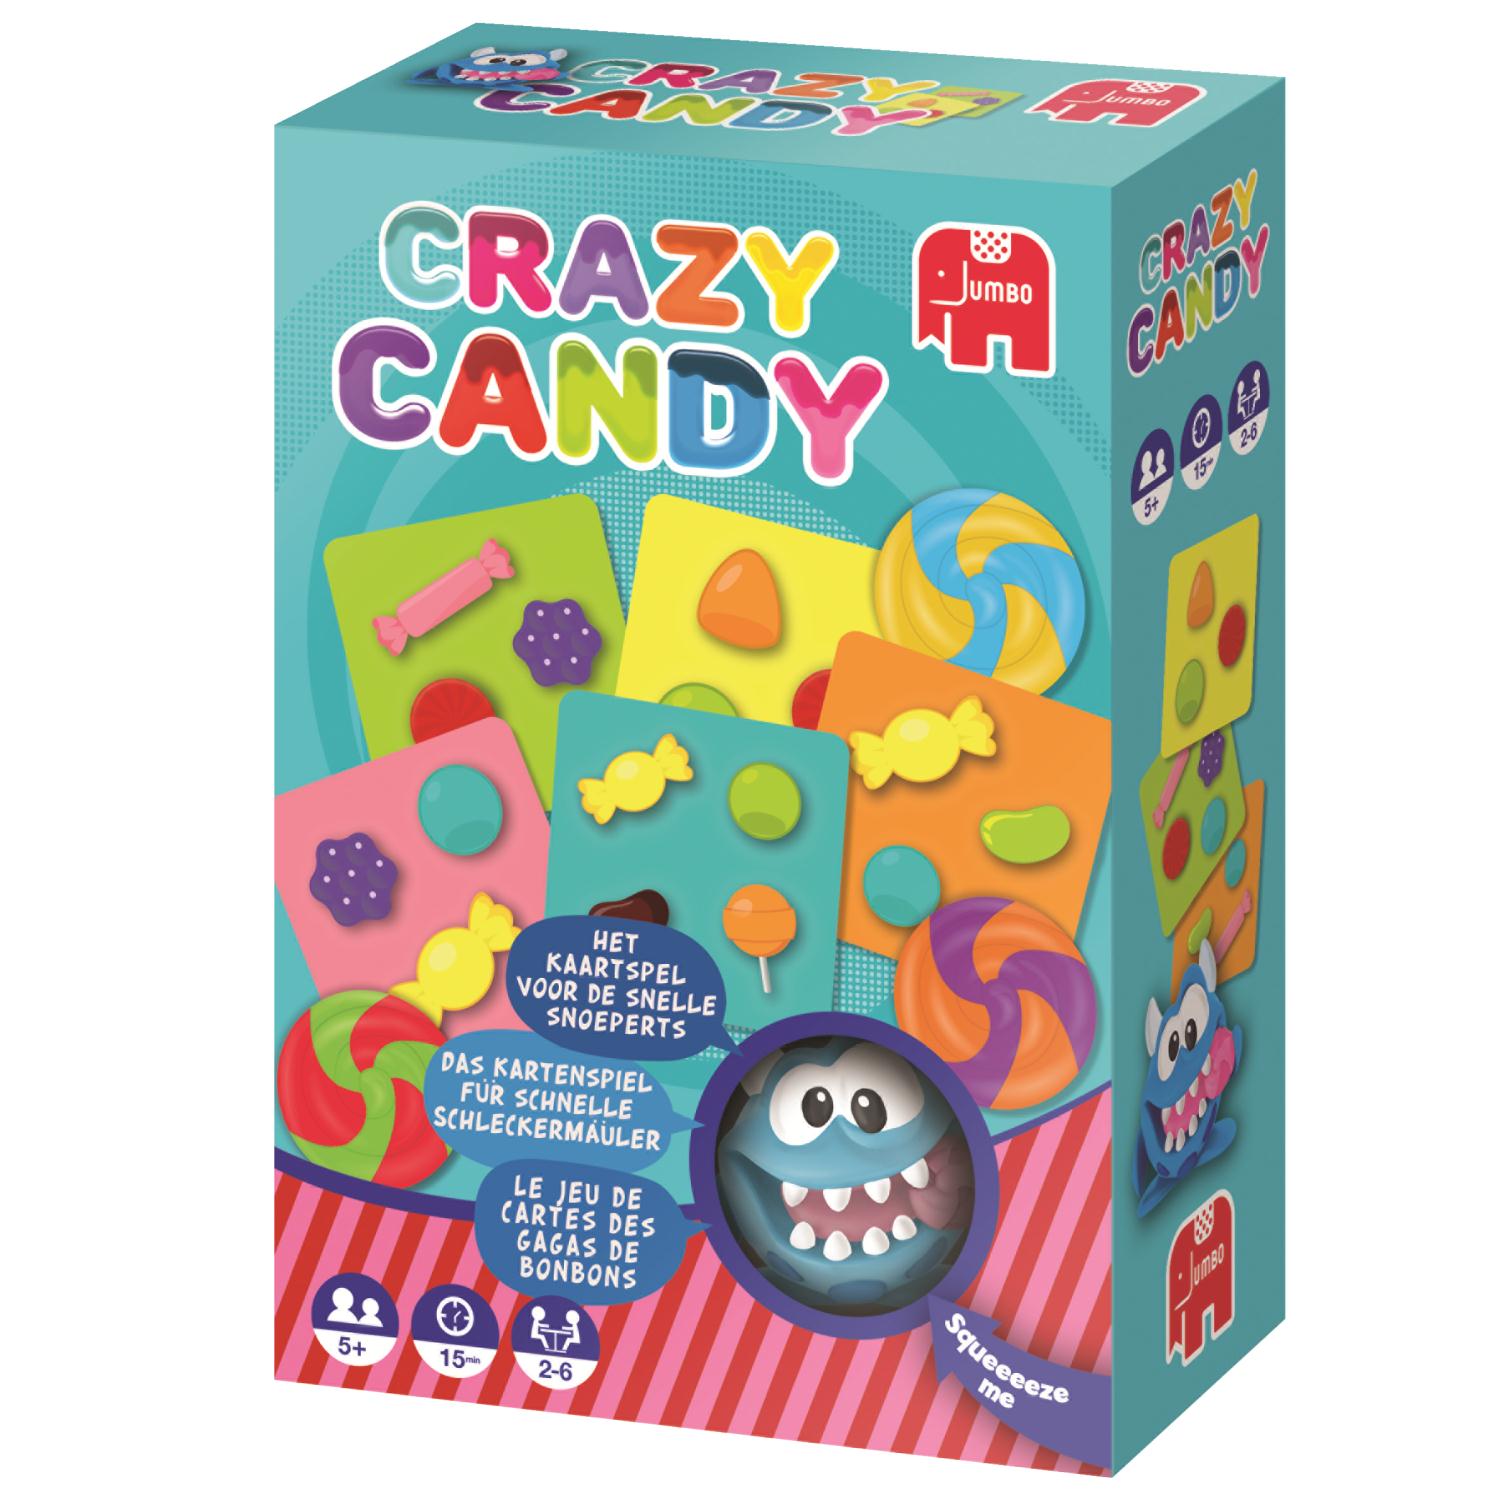 Crazy candy